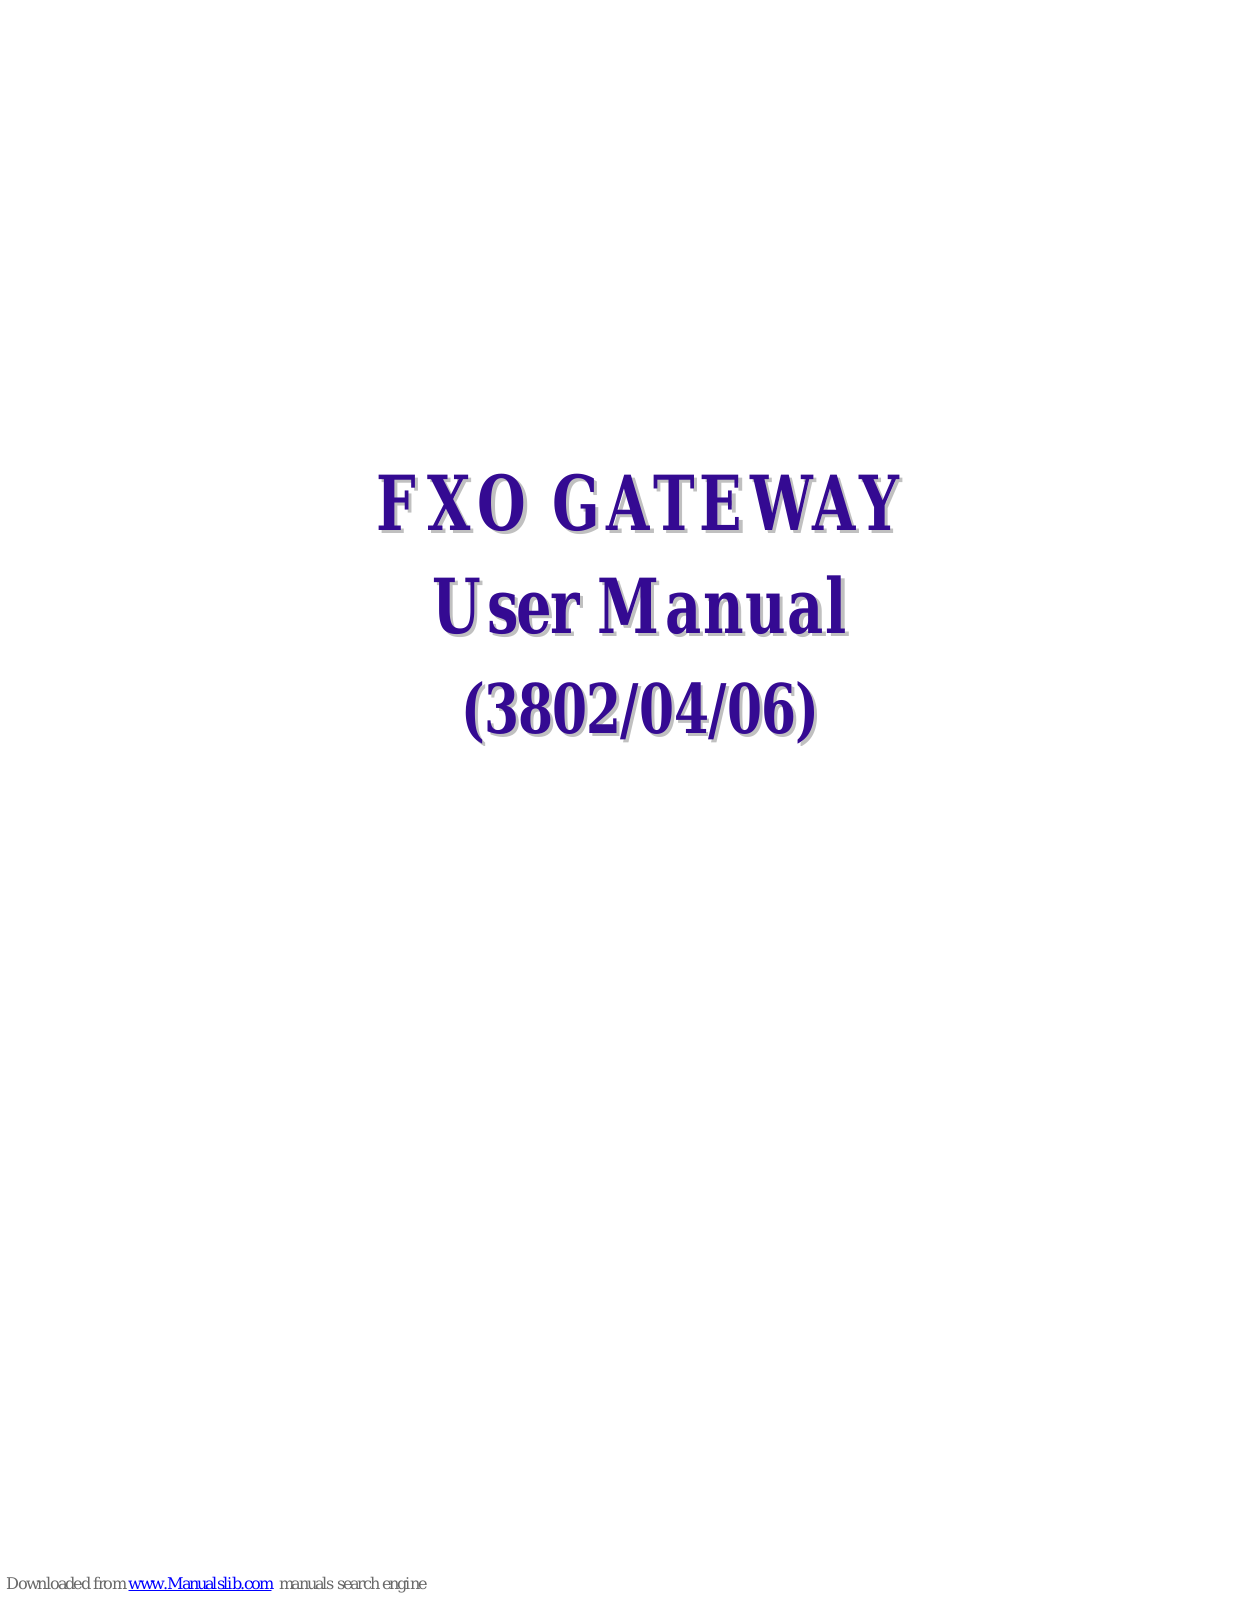 WELLTECH FXO GATEWAY H.323 3802 - VERSION 117B, FXO GATEWAY H.323 3804 - VERSION 117B, FXO GATEWAY H.323 3806 - VERSION 117B, 3802 FXO User Manual